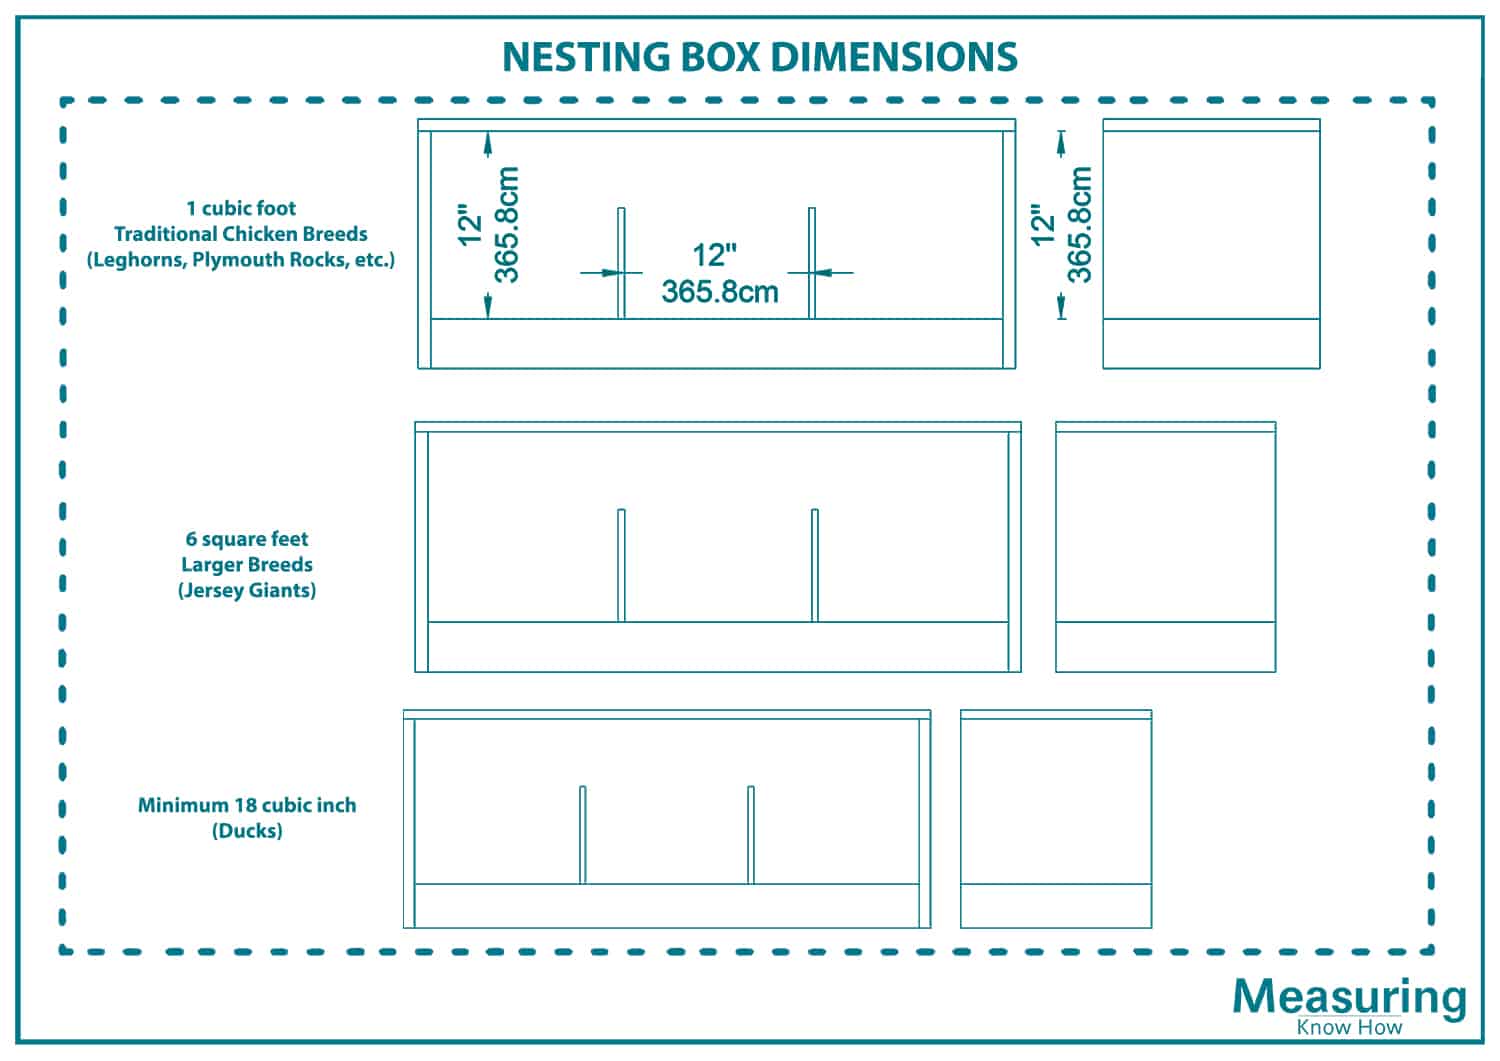 Nesting box dimenions